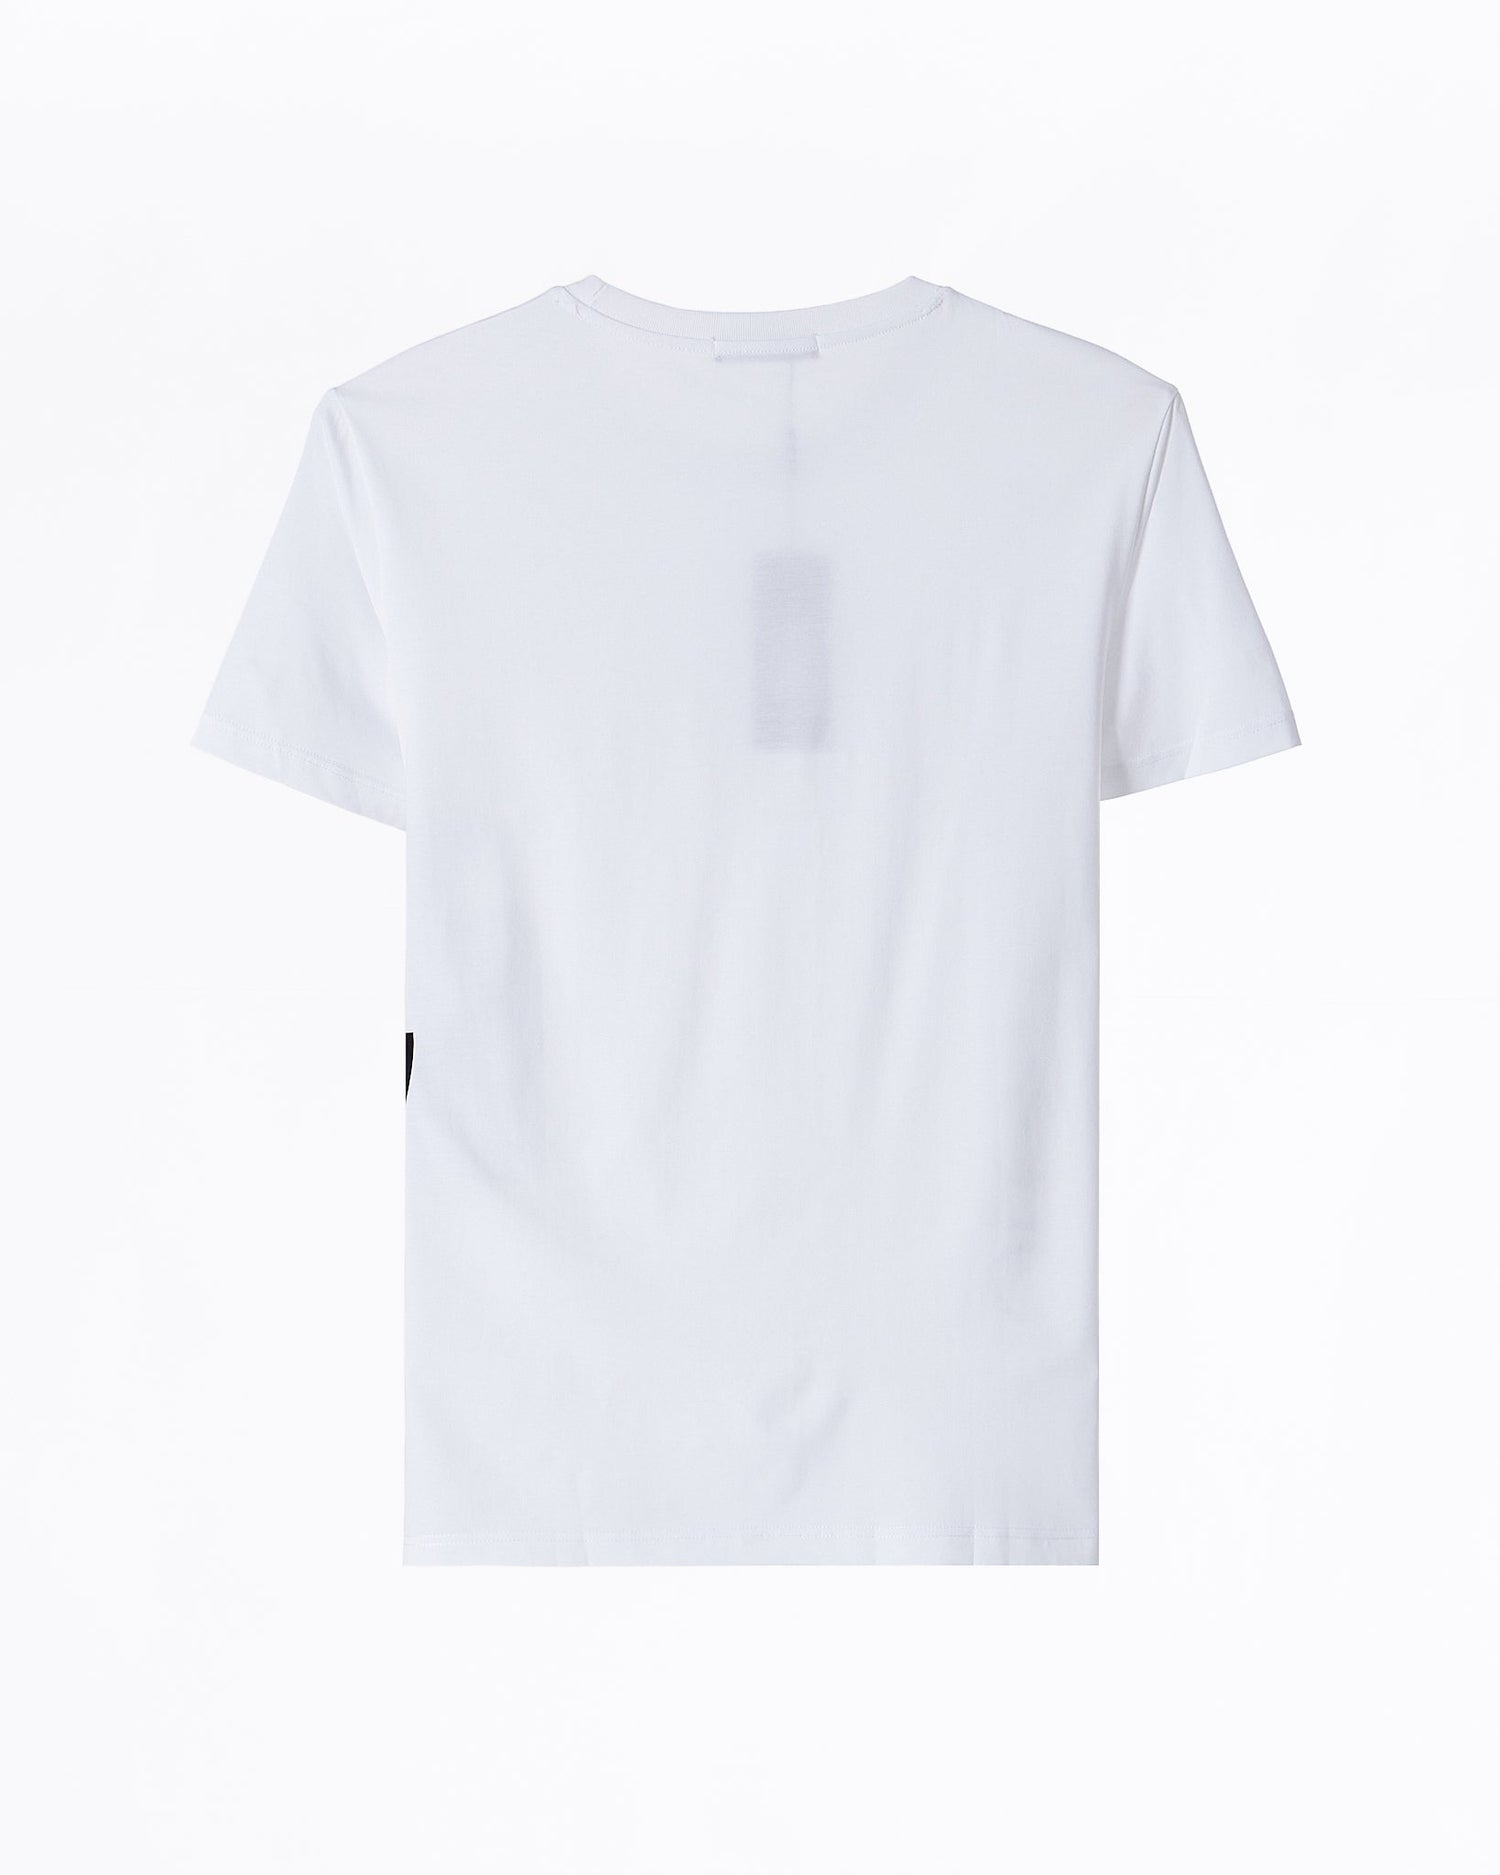 MOI OUTFIT-DG Milan Men White T-Shirt 57.90